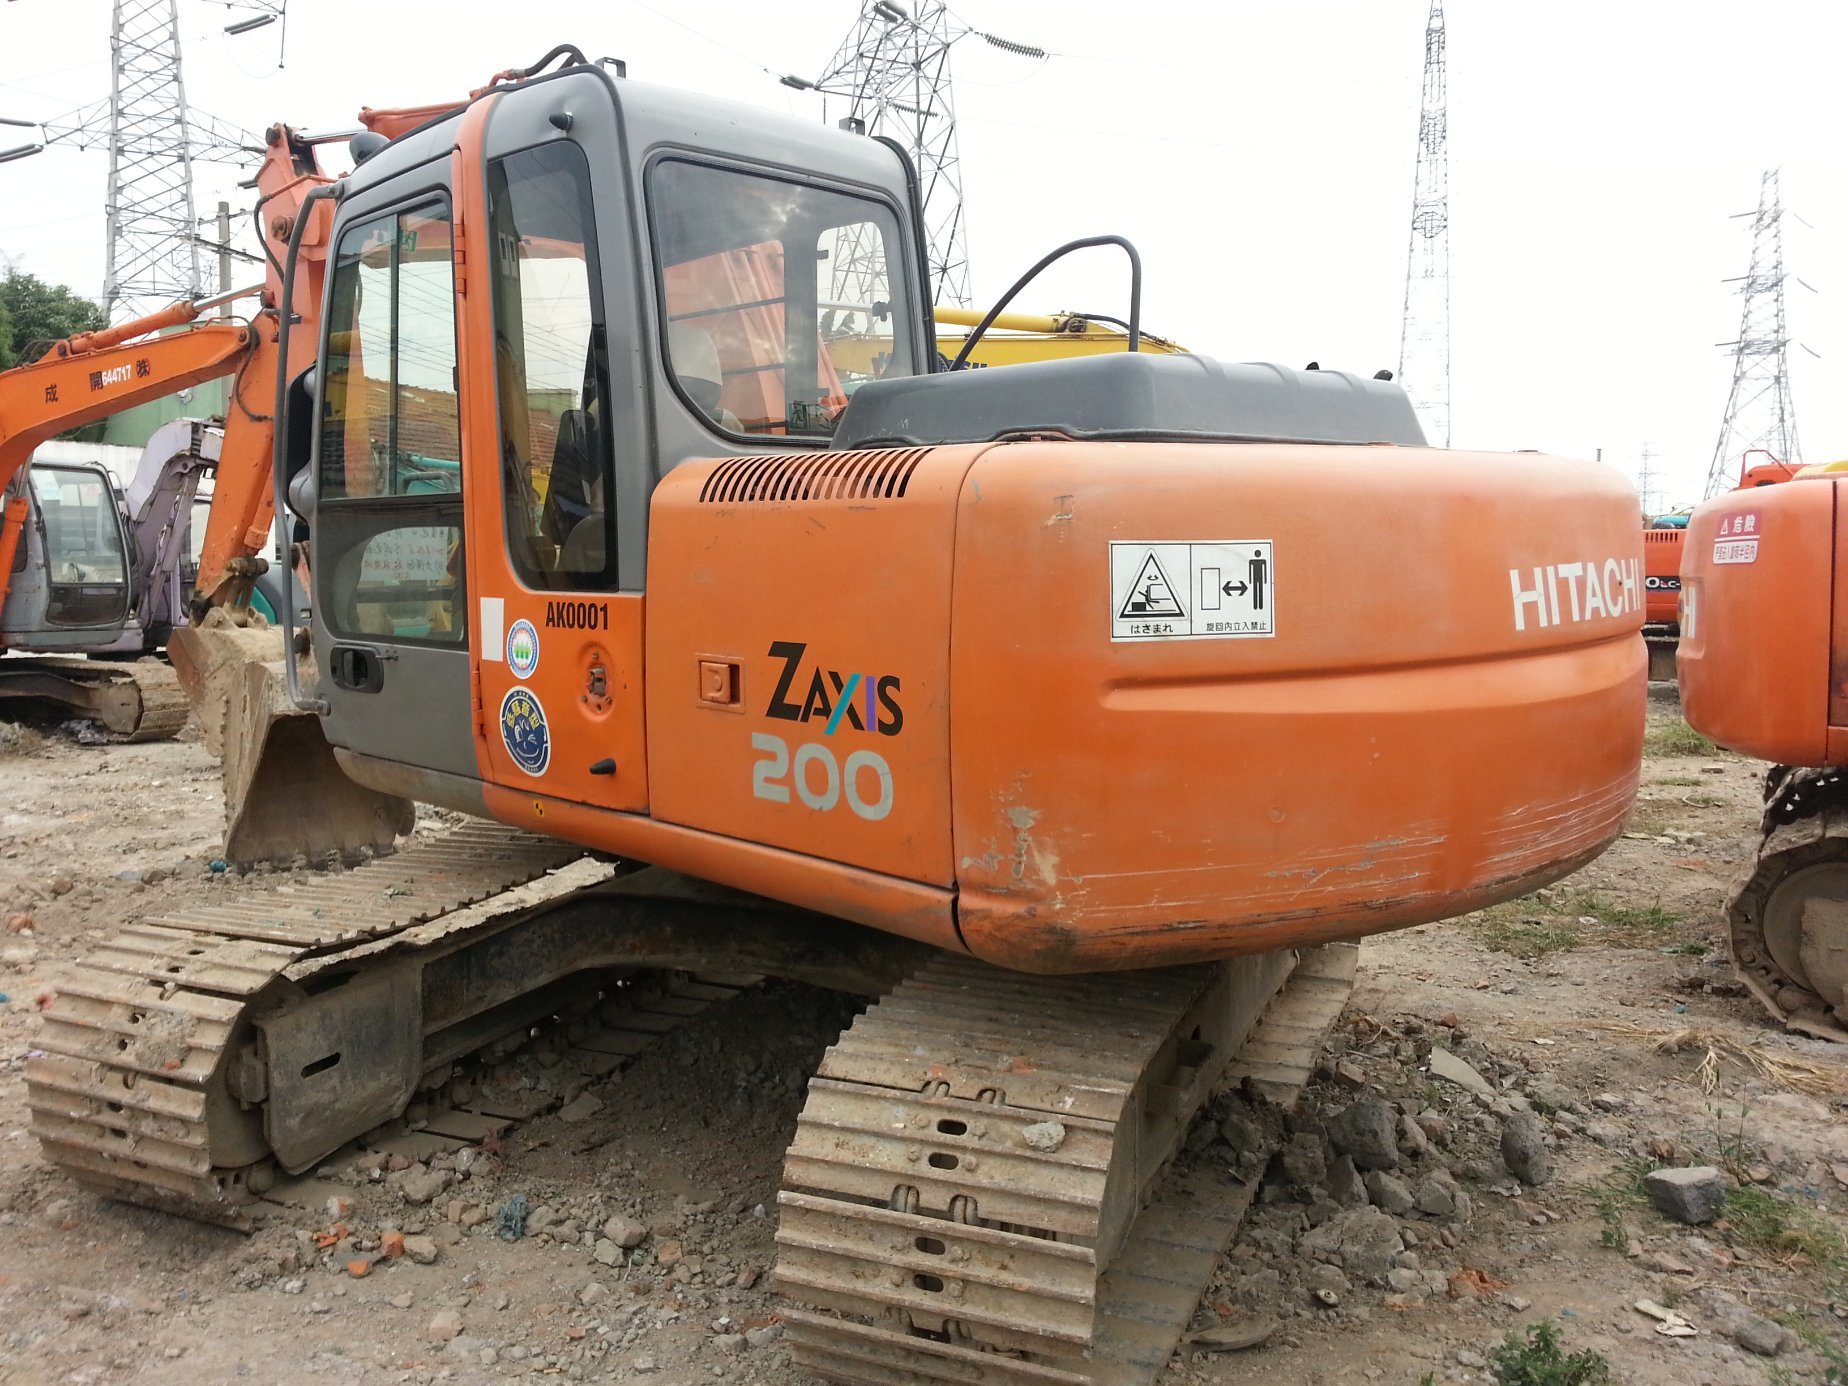 
                Hitachi Zx200.6 Original Japan Used Excavator for Sale
            